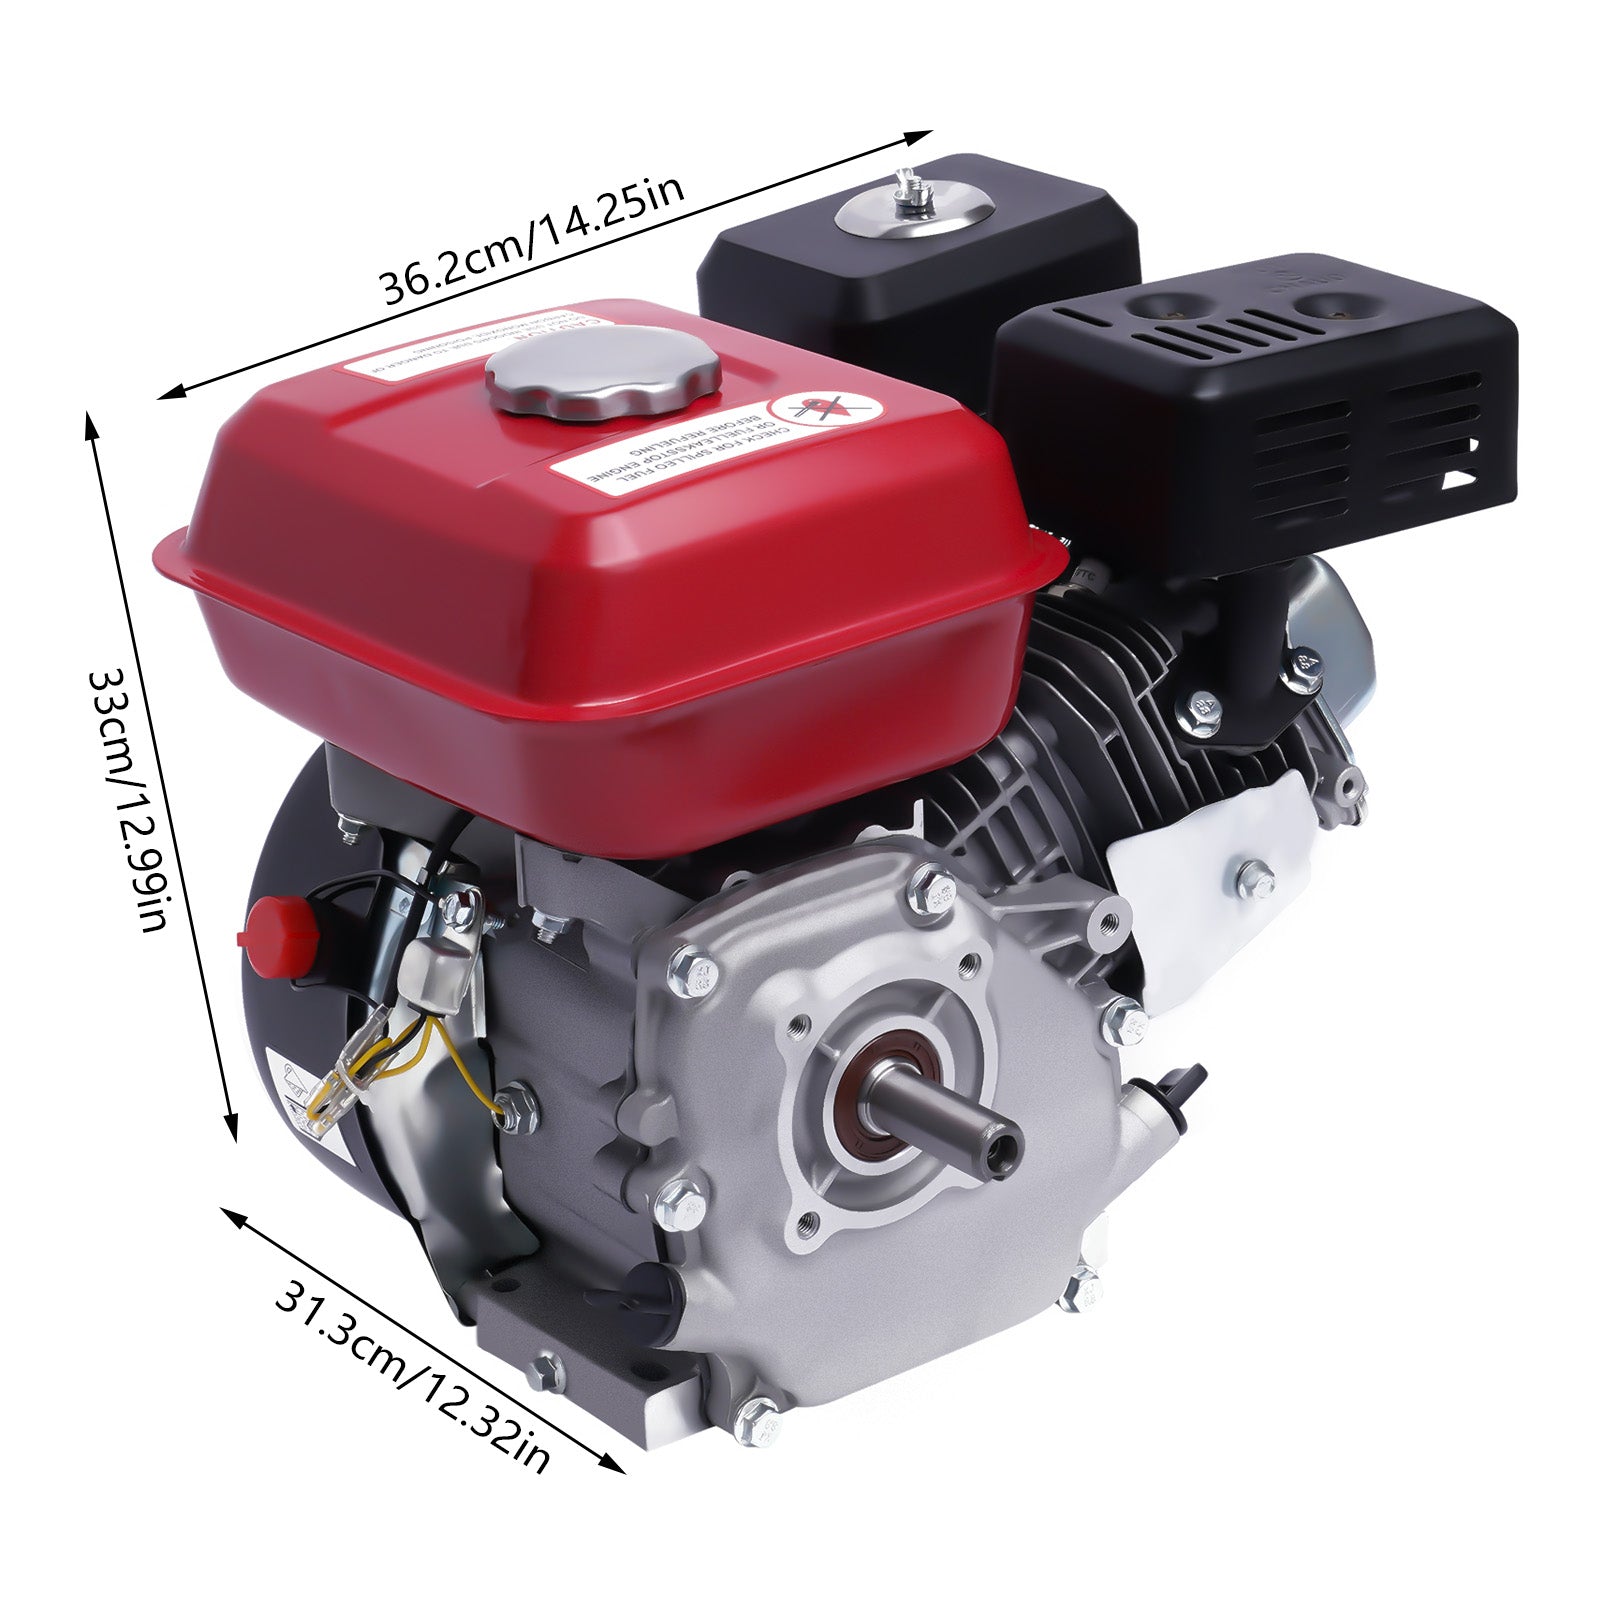 Motore benzina 7,5 cv 4 kW motore stazionario motore kart 4 tempi monocilindrico 20mm